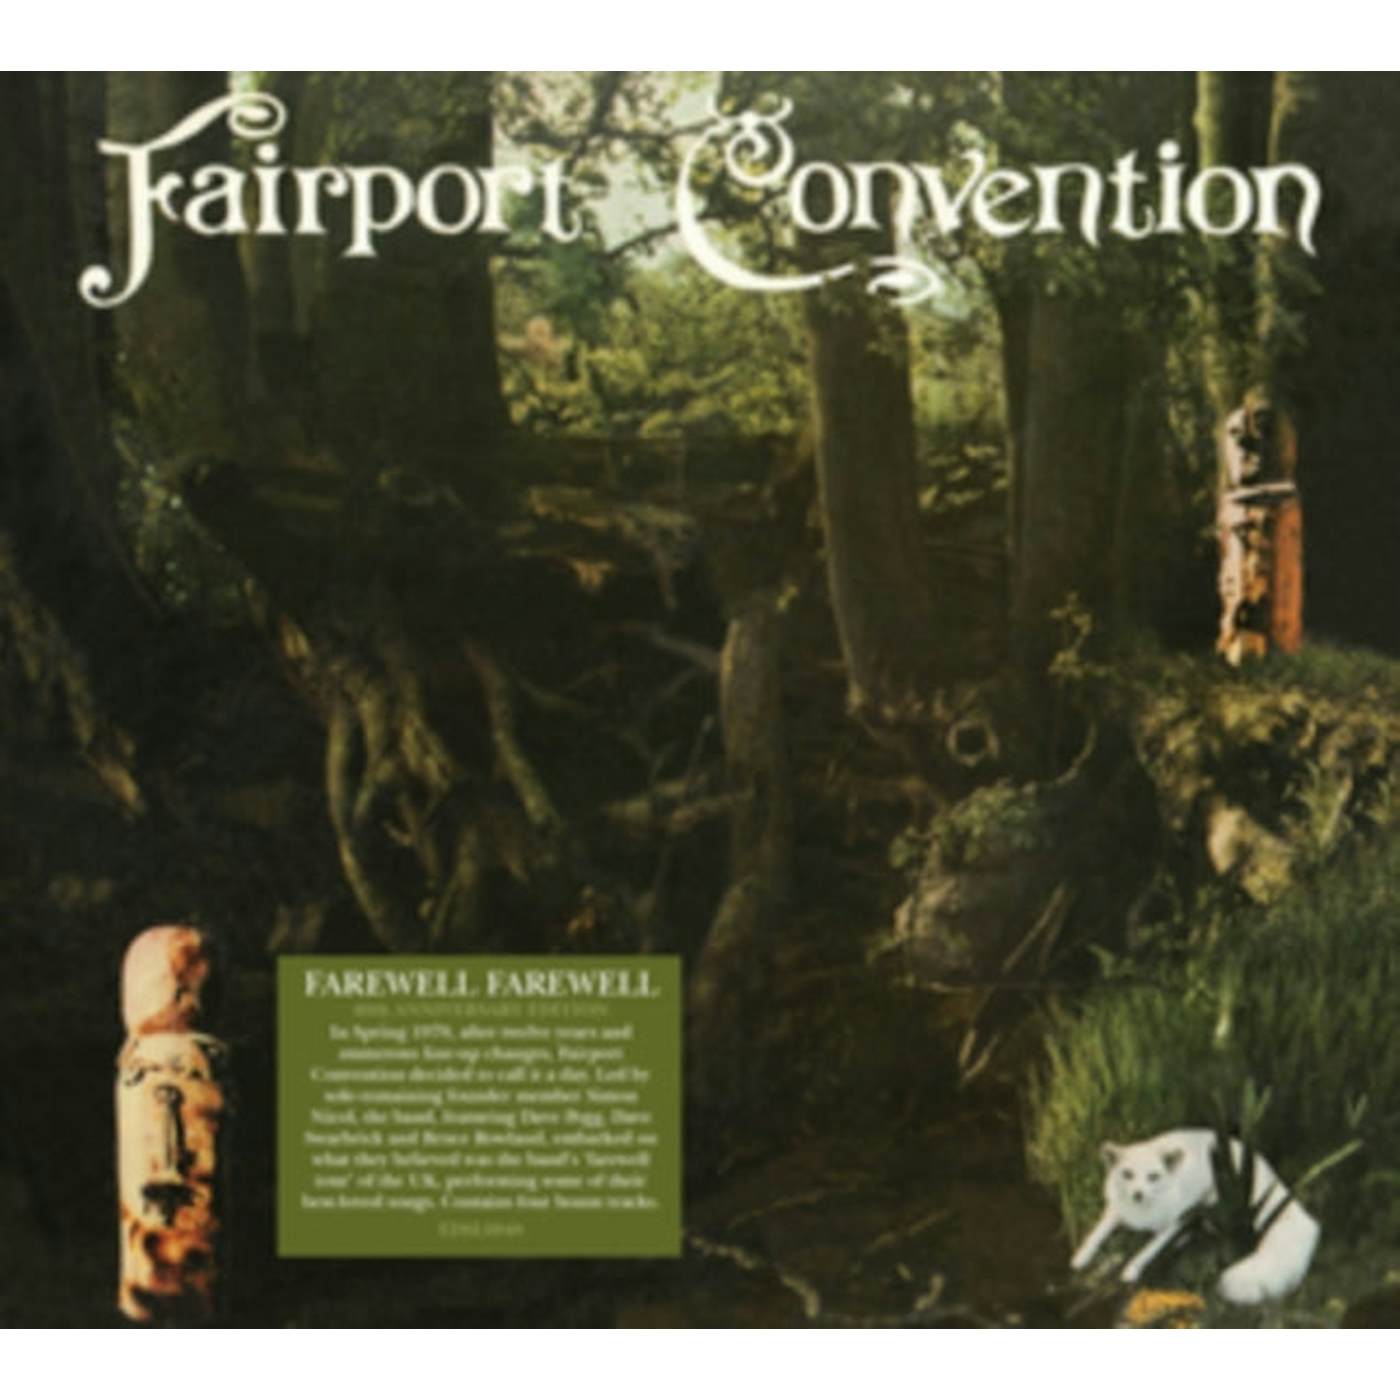 Fairport Convention CD - Farewell. Farewell